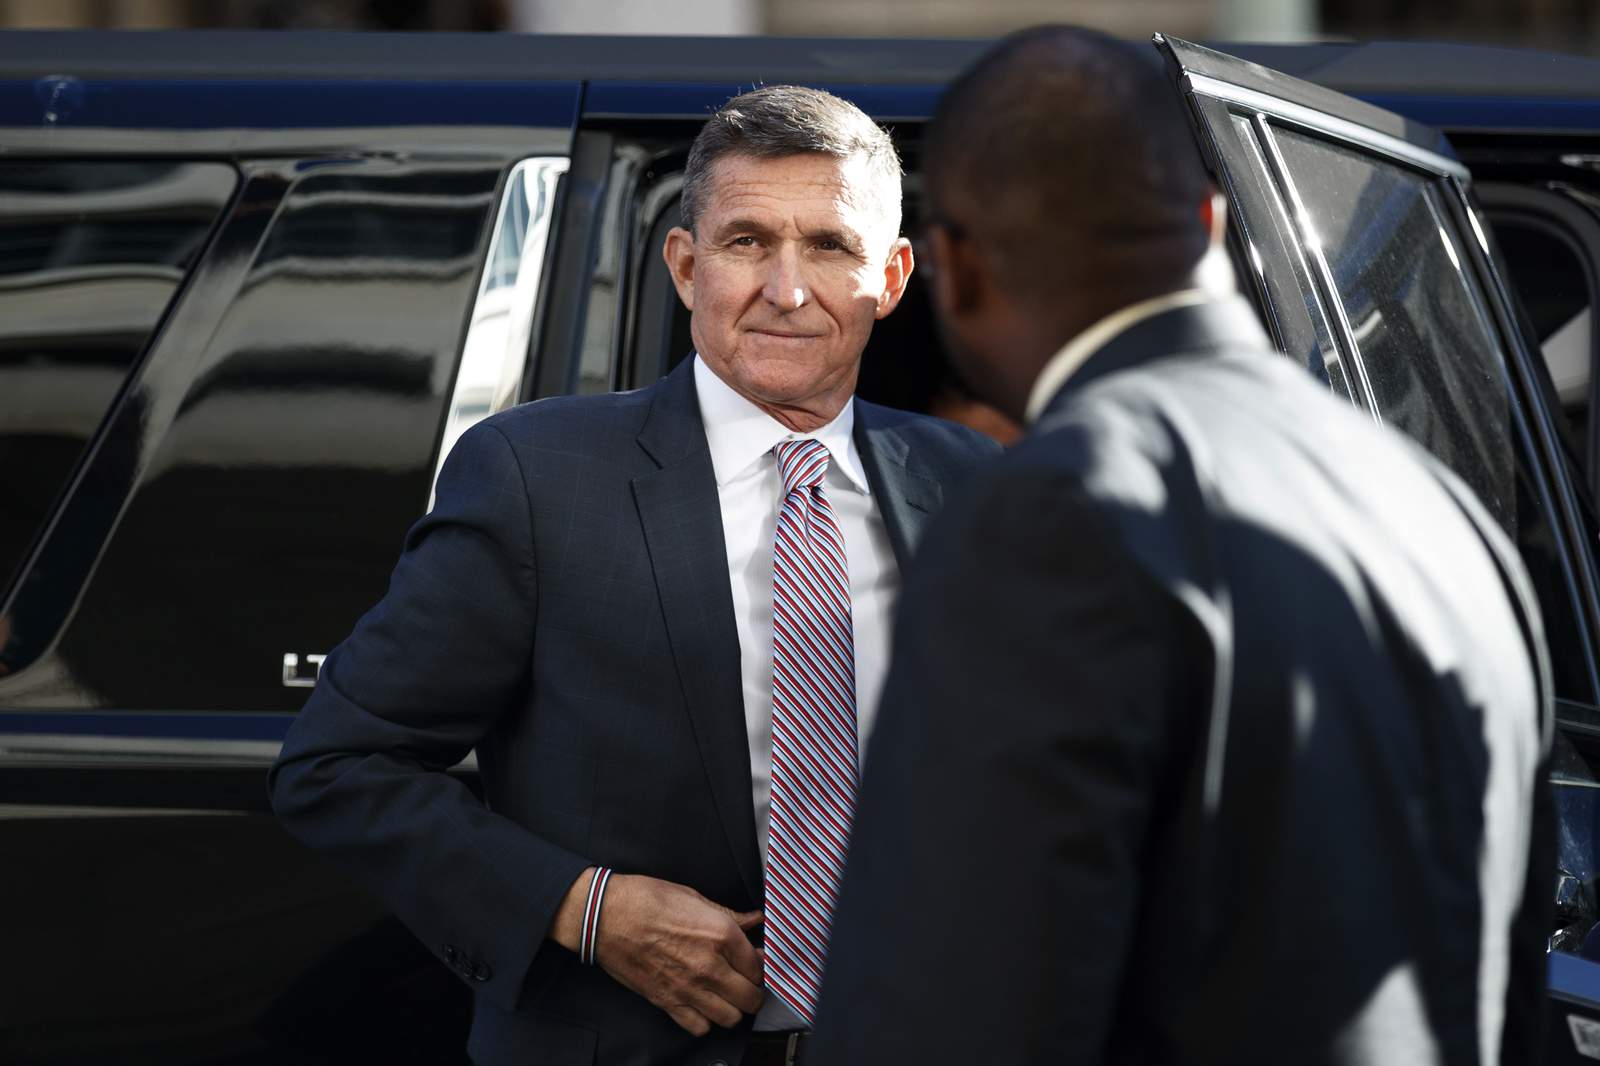 DC judge asks for full appeal review of Flynn dismissal